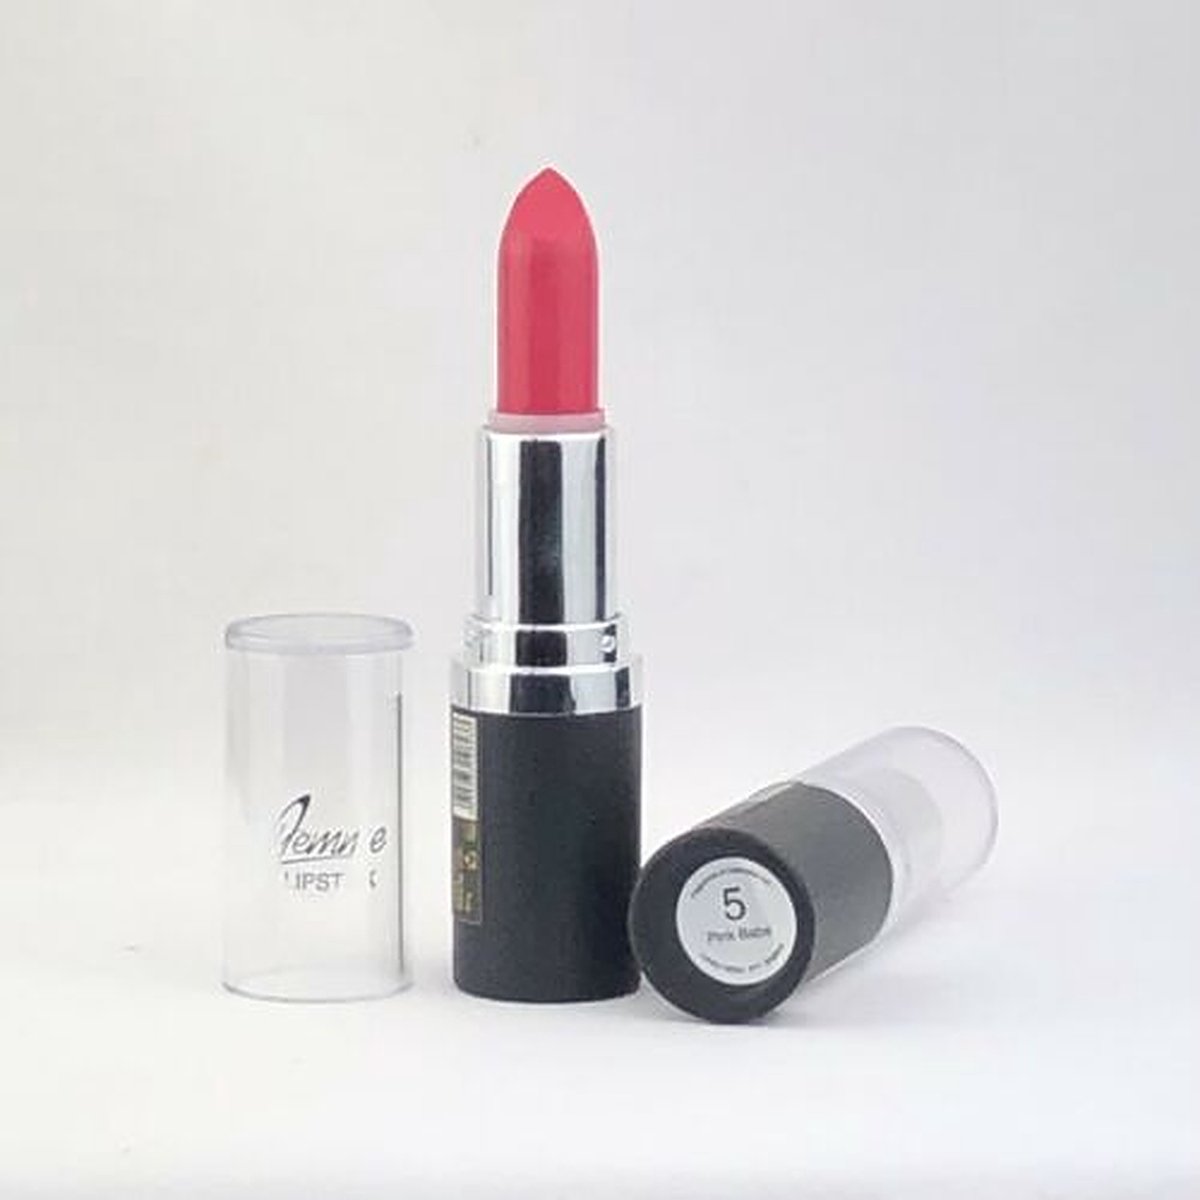 La Femme lipstick - 5 Pink Babe